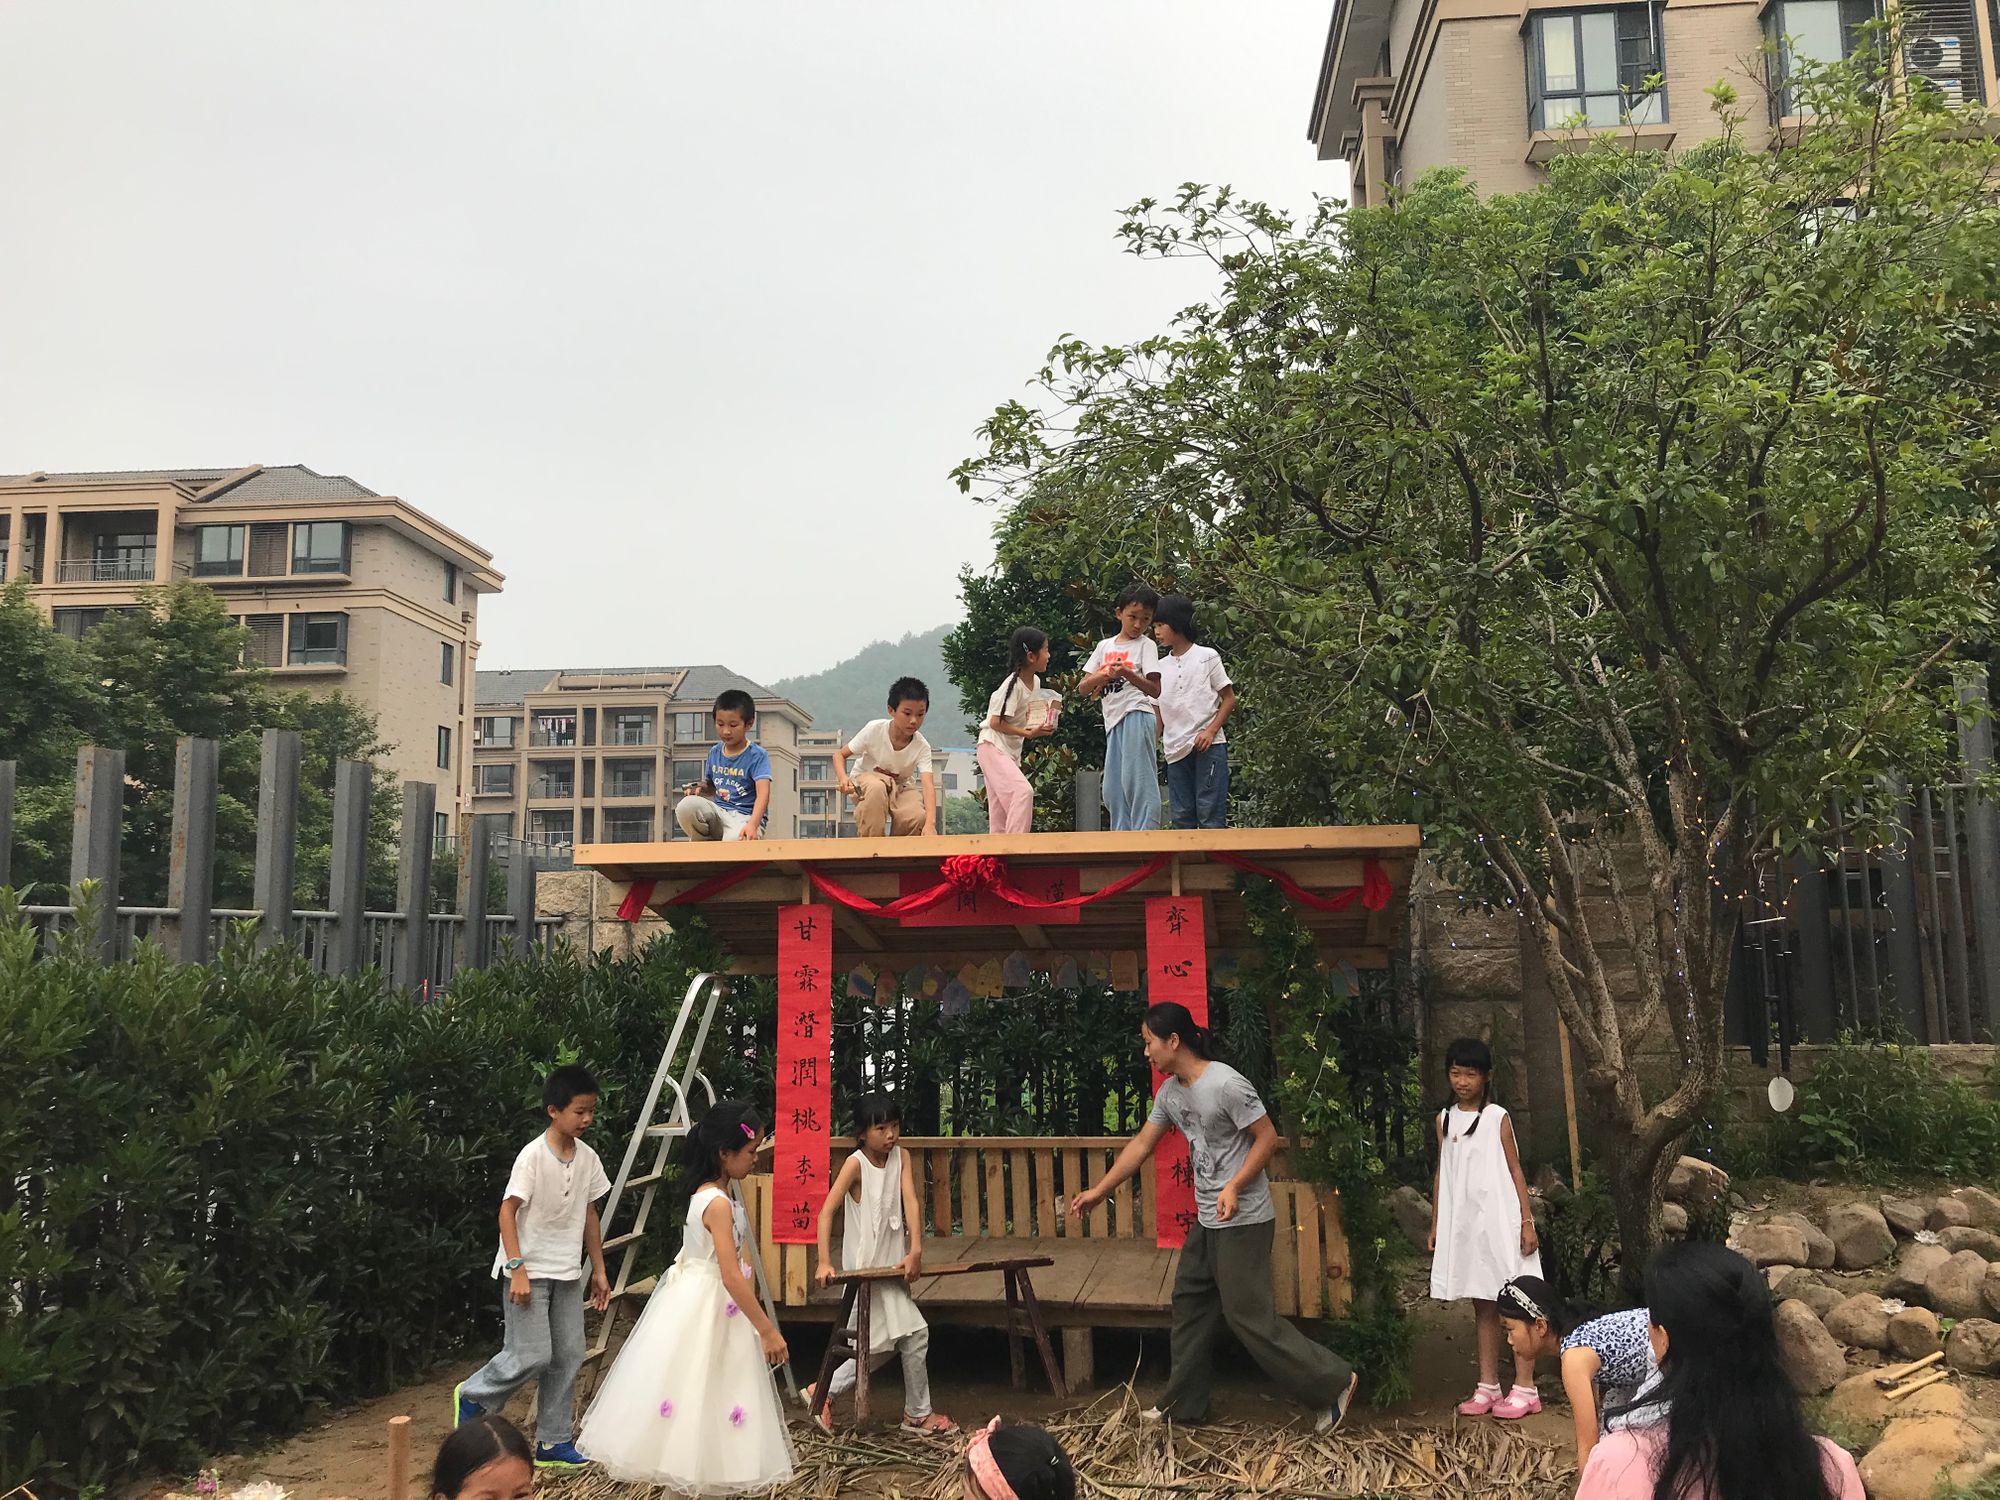 School in China